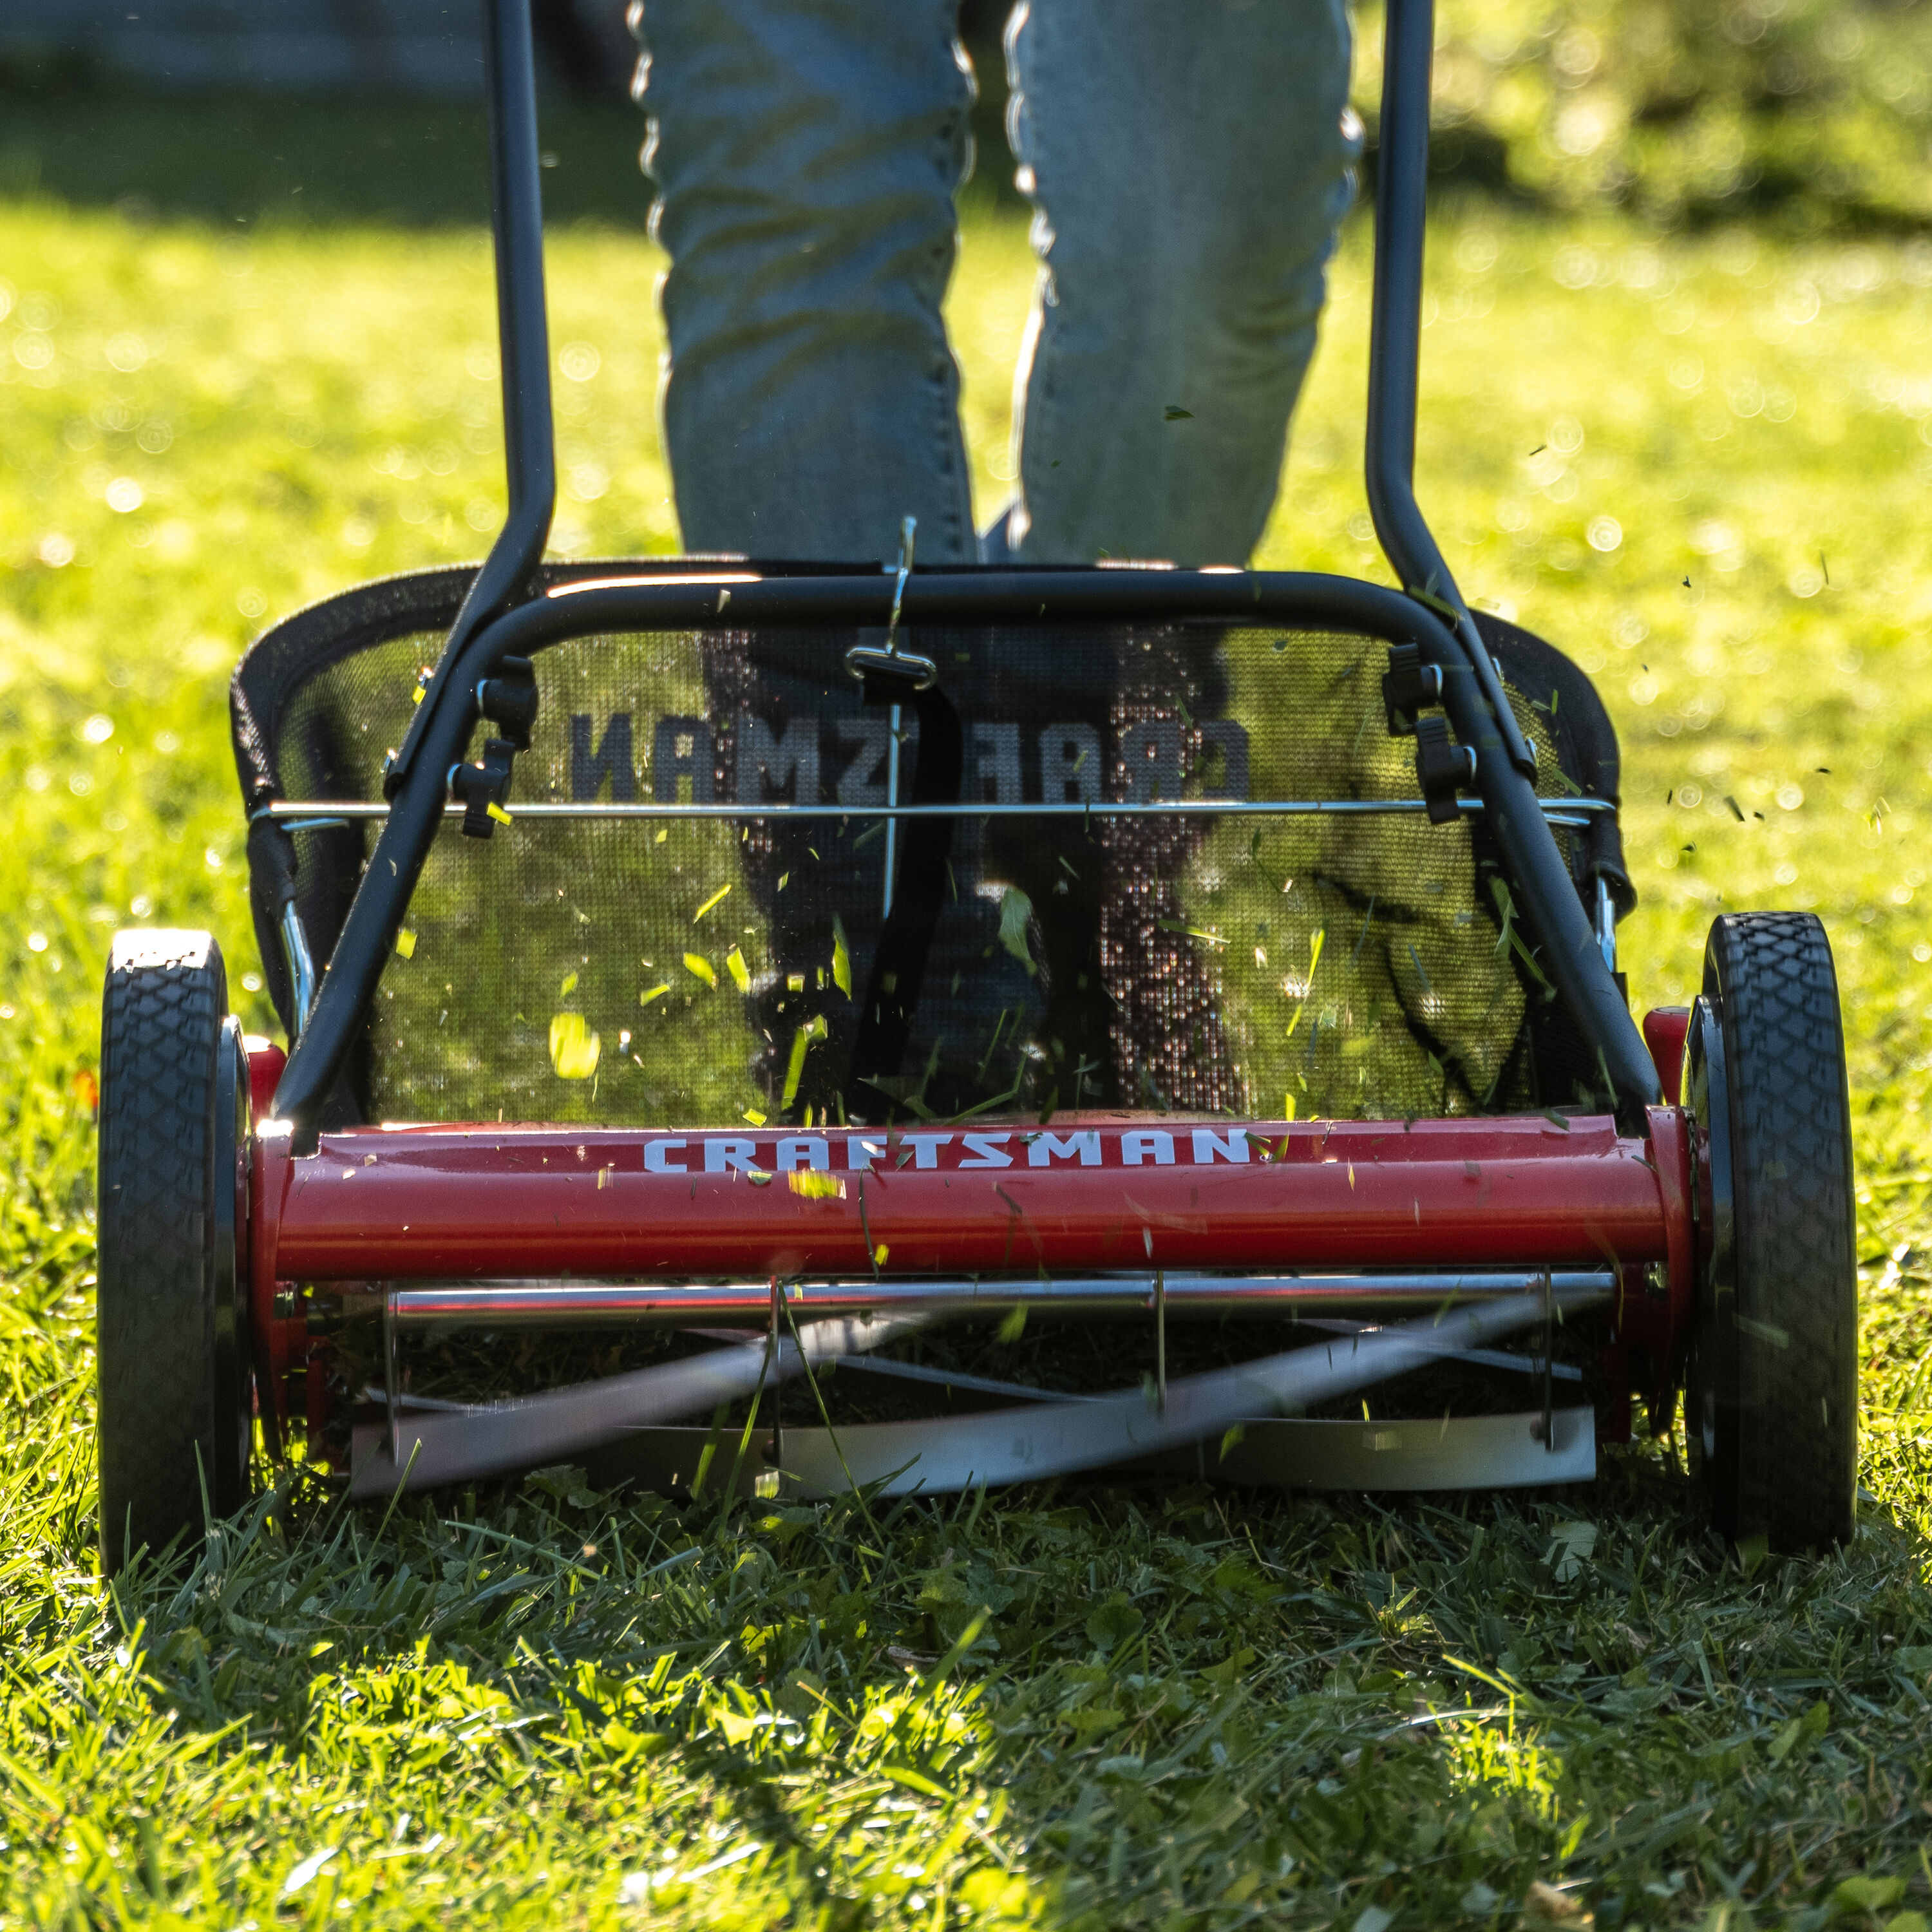 18-Inch Manual Lawn Mower 5-Blade Push Reel Lawn Mower w/Grass Catcher